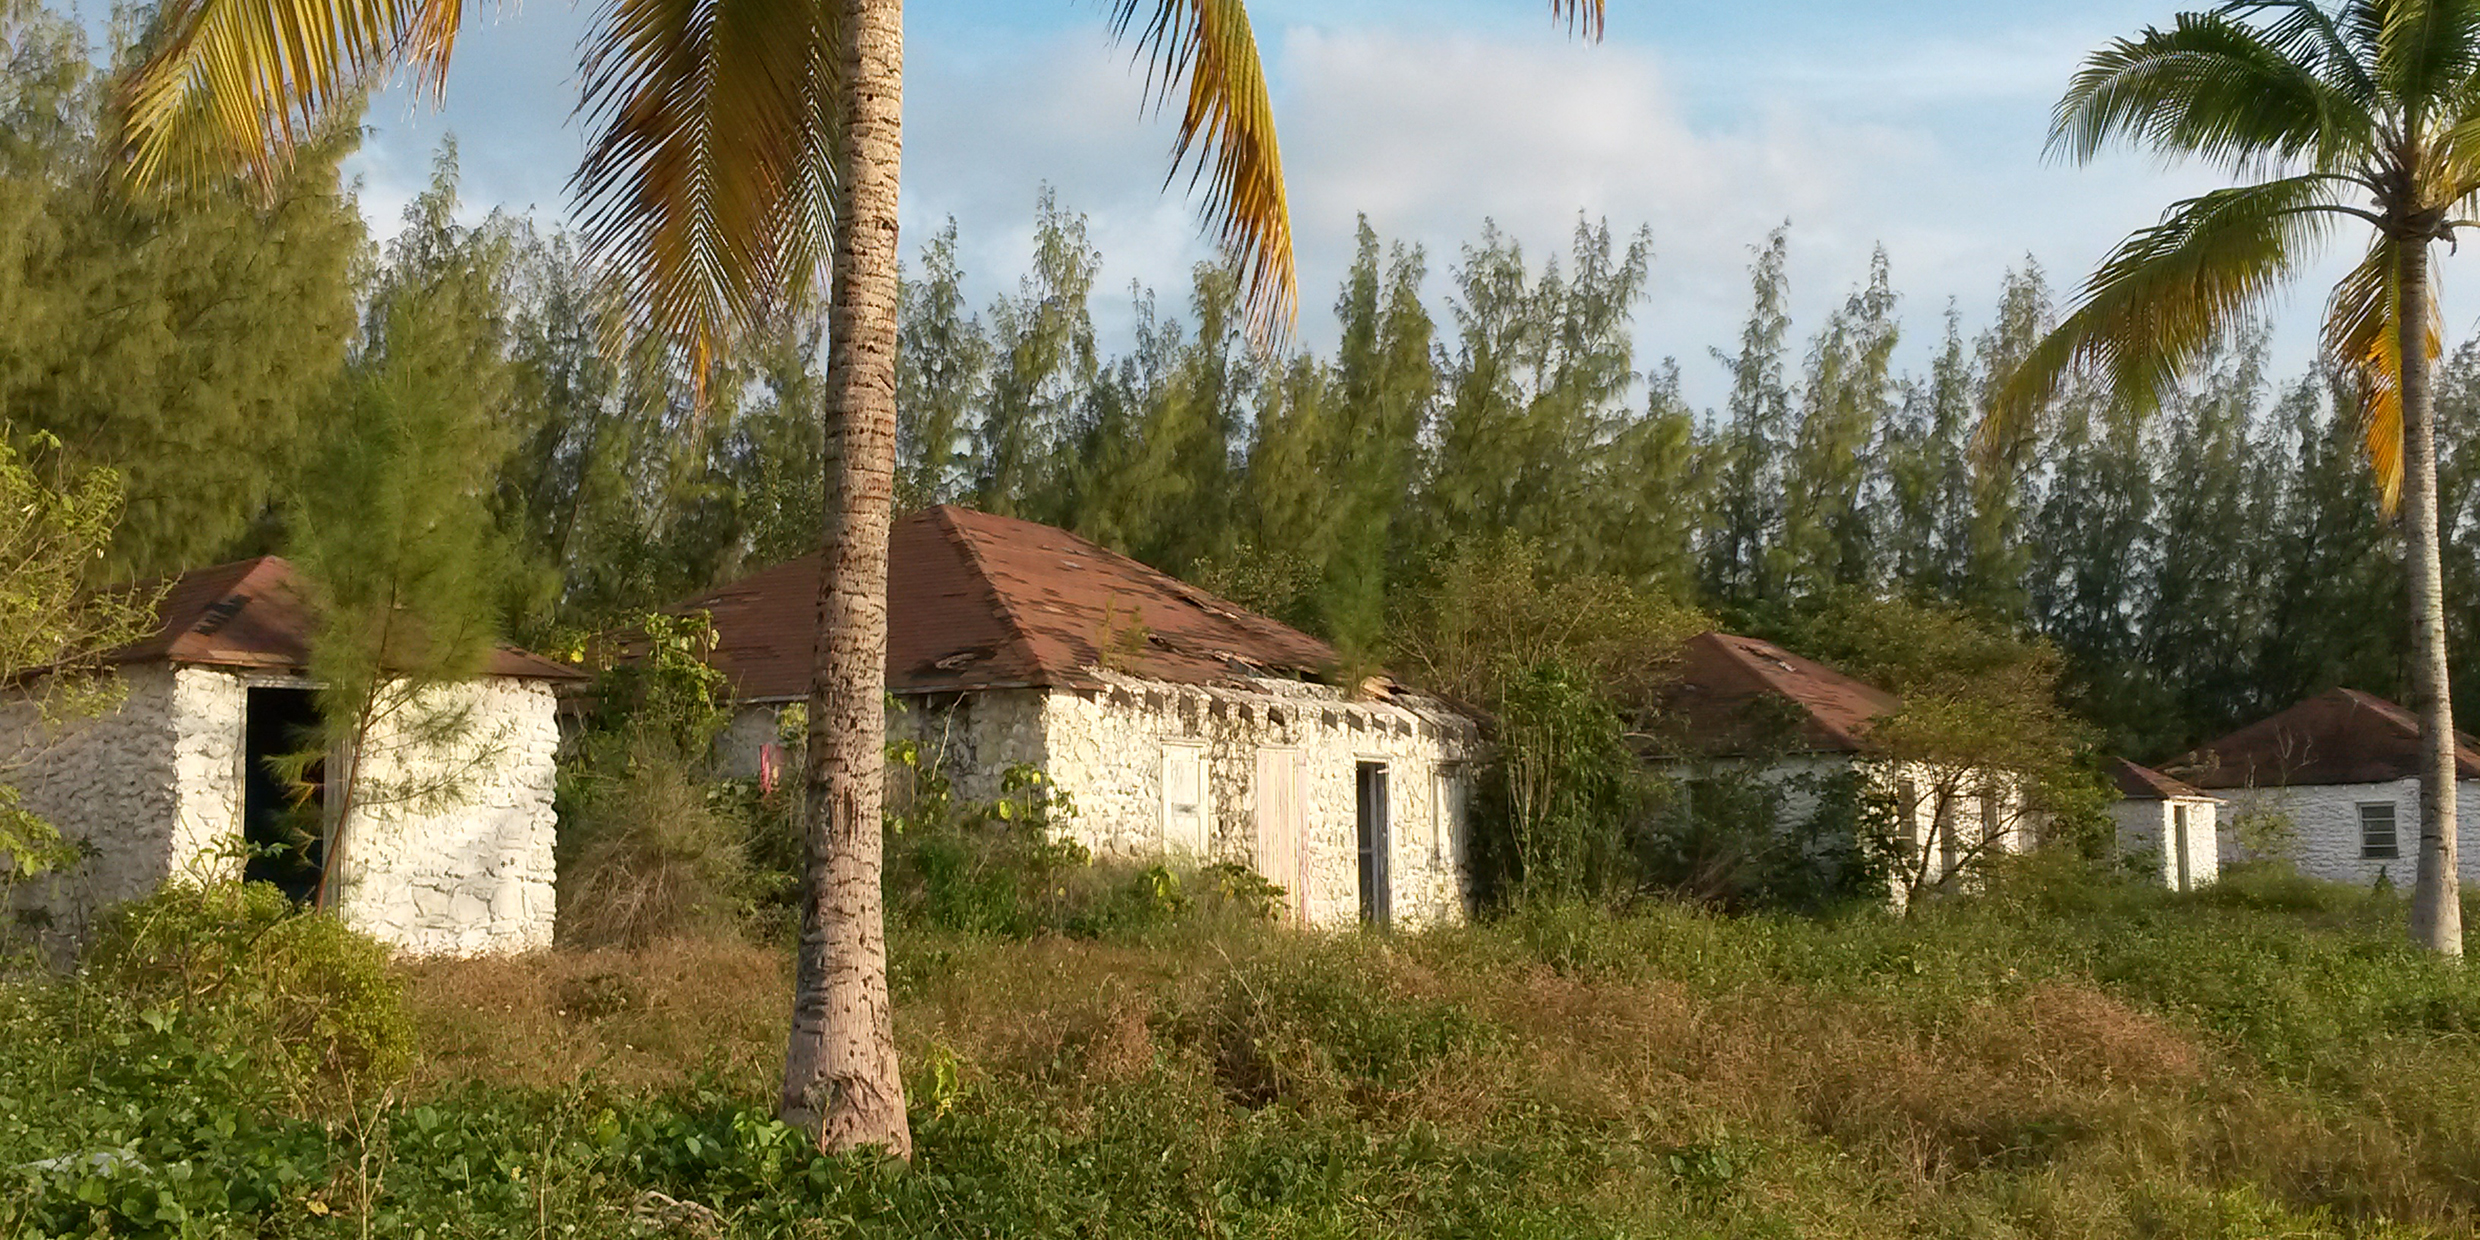 Image of abandoned and overgrown island dwellings